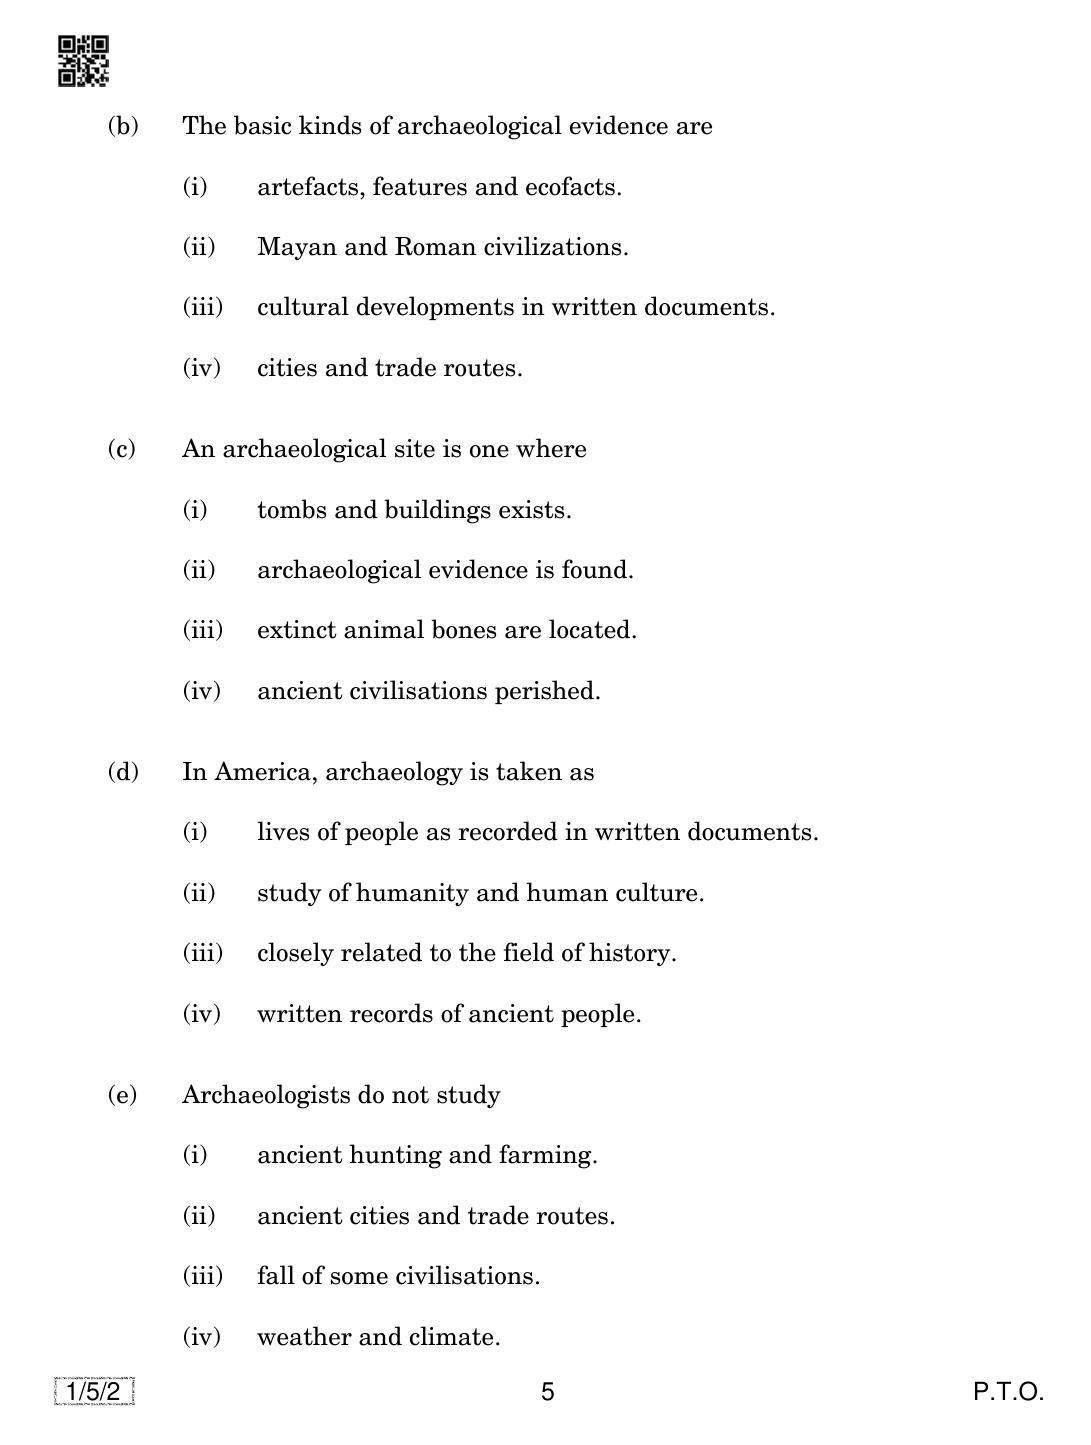 CBSE Class 12 1-5-2 English Core 2019 Question Paper - Page 5